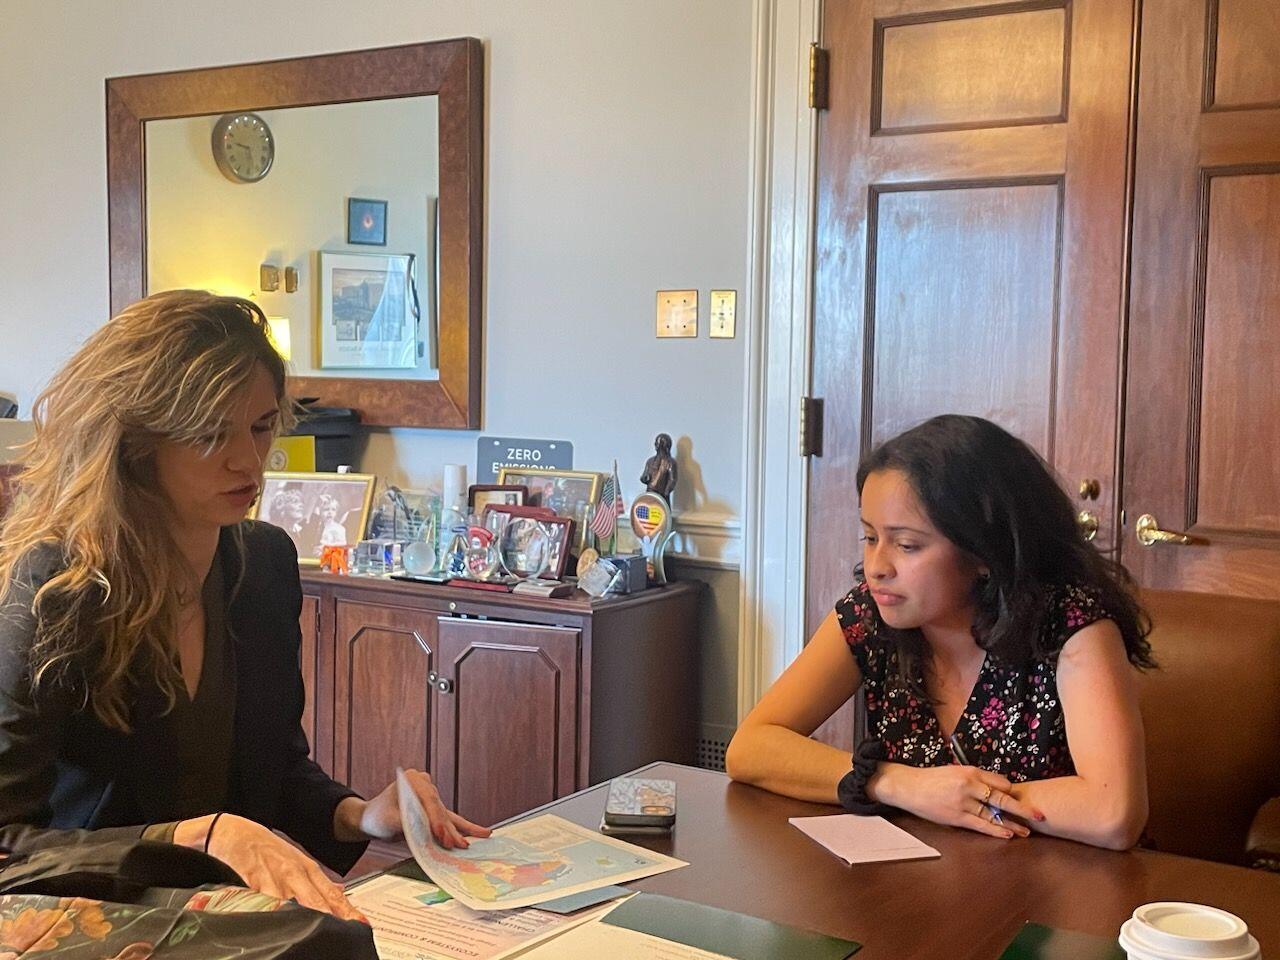 Taylor met with the office of Congresswoman Zoe Lofgren to discuss protecting water for wetlands.